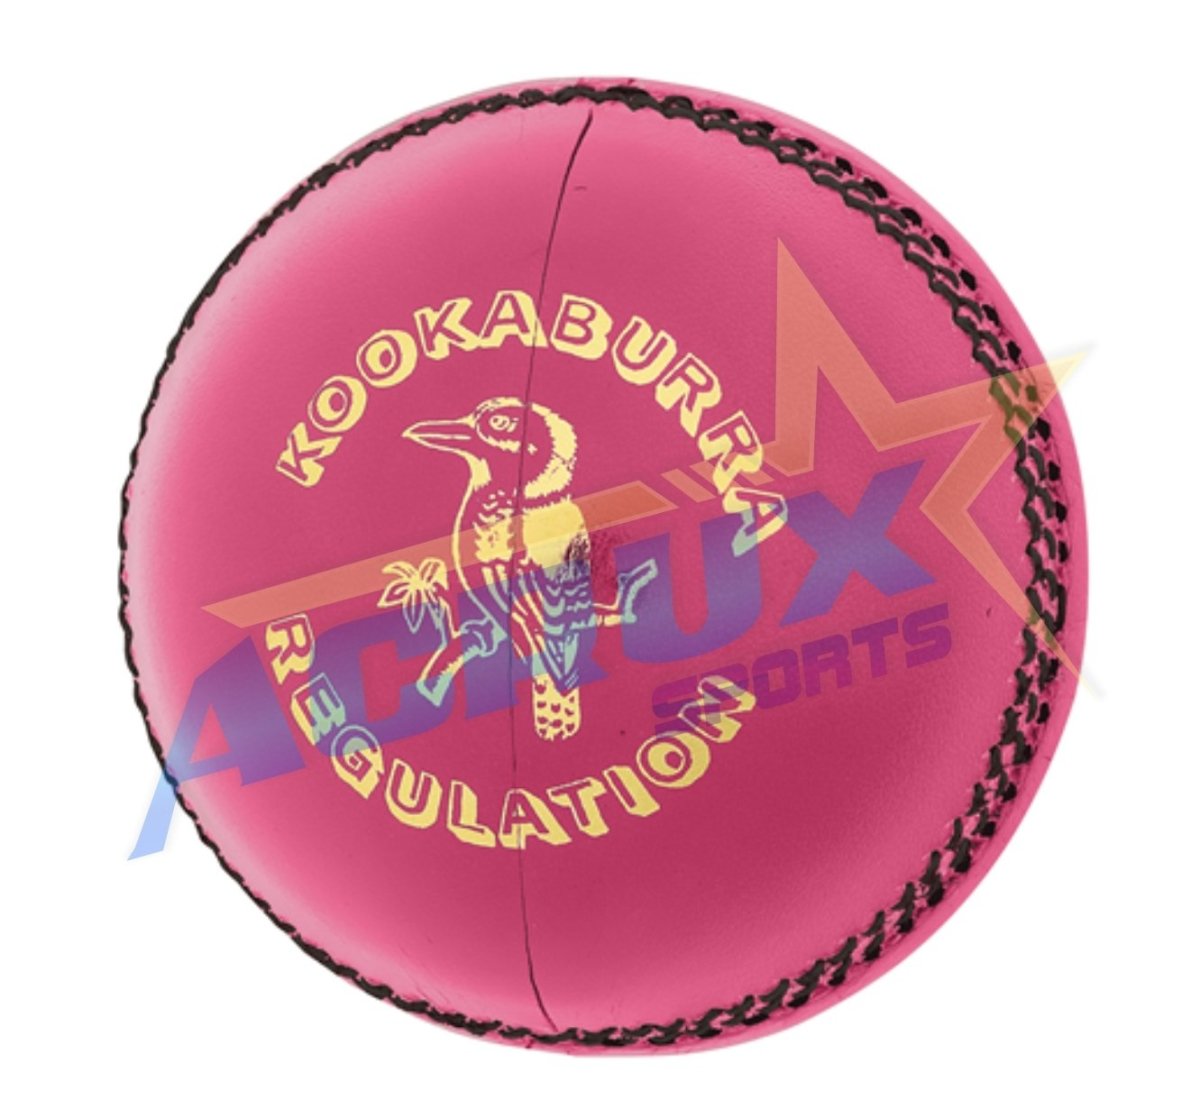 Kookaburra Regulation Cricket Ball Pack of 12.